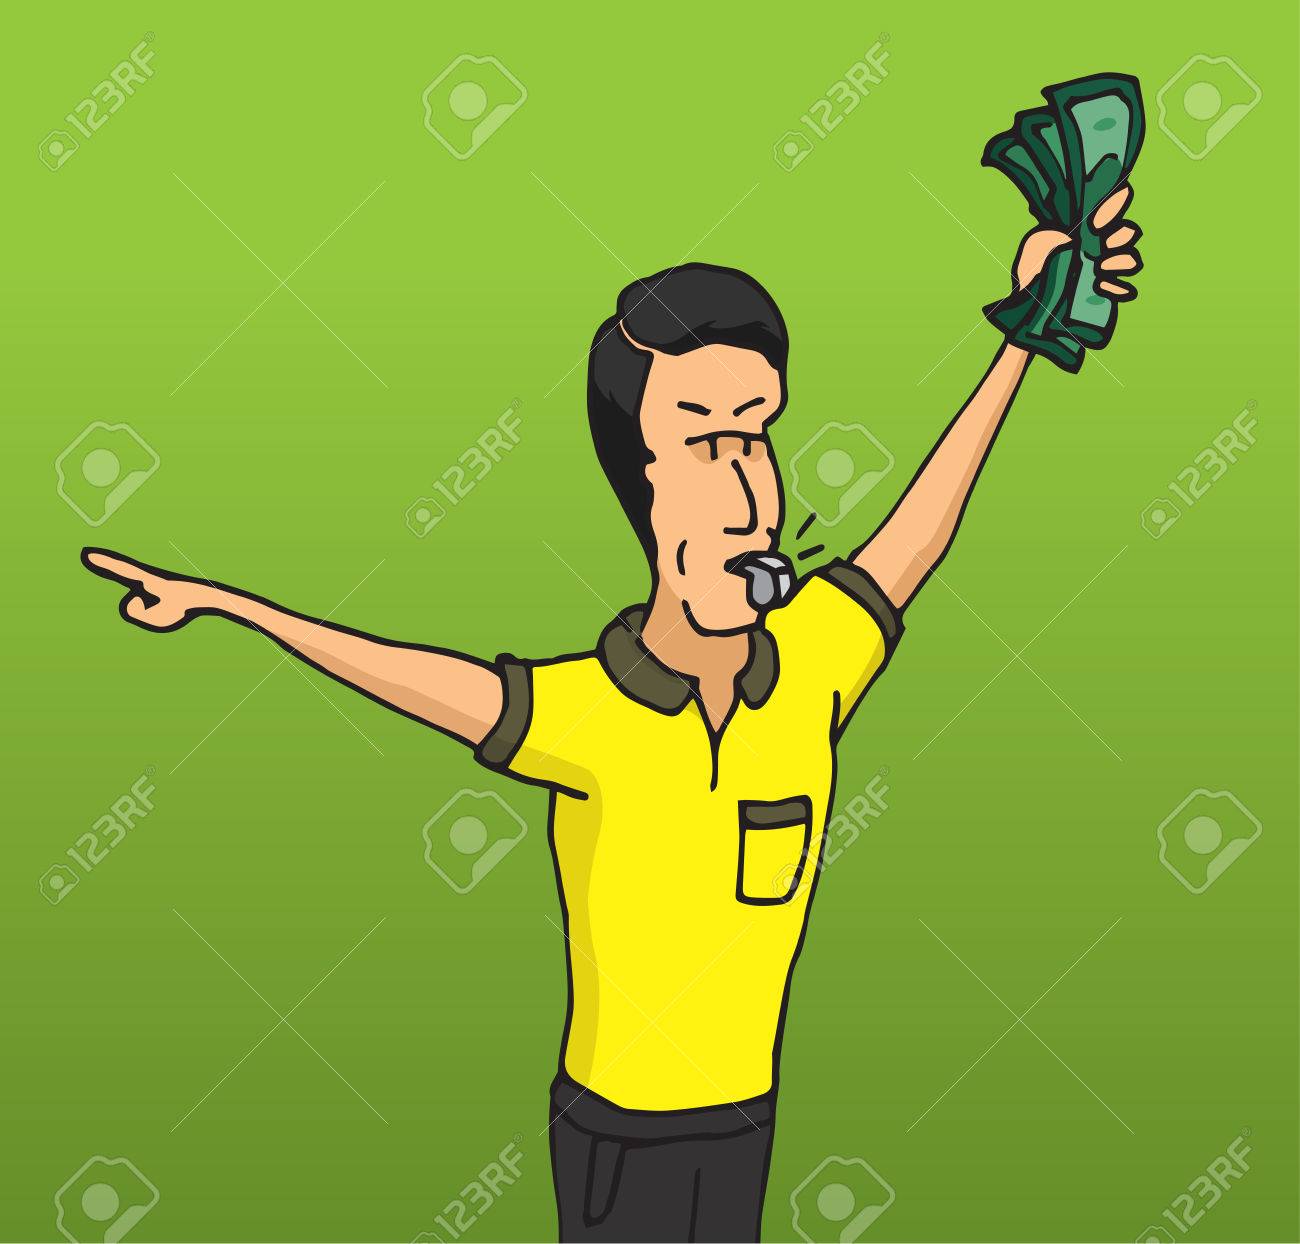 42154644-cartoon-illustration-of-corrupt-referee-taking-a-bribe.jpg